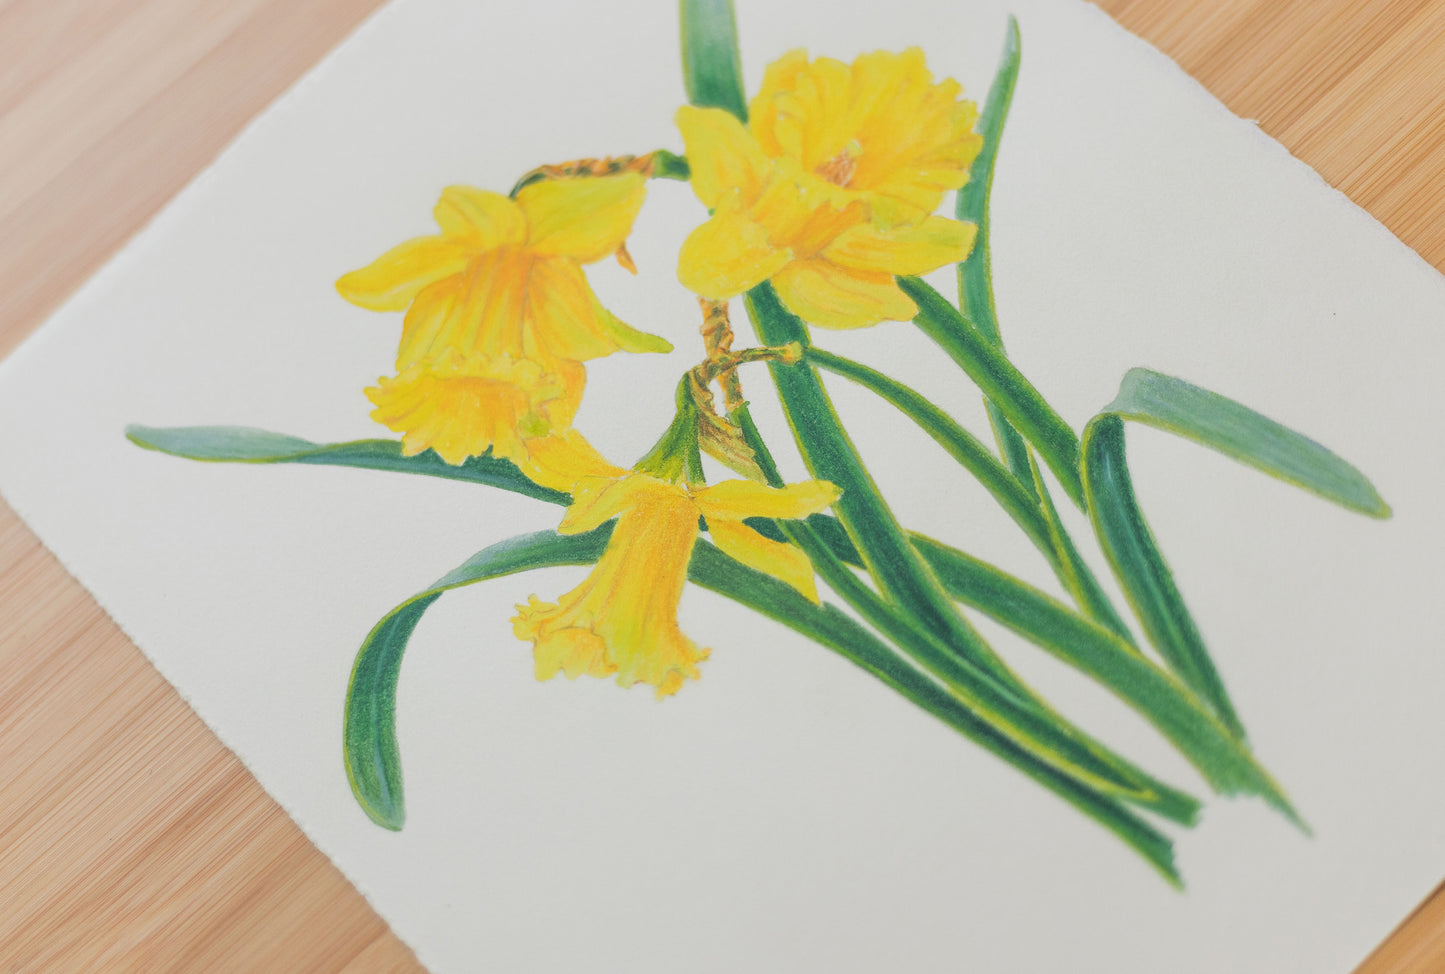 'Daffodils' mixed media illustration. 8x10in